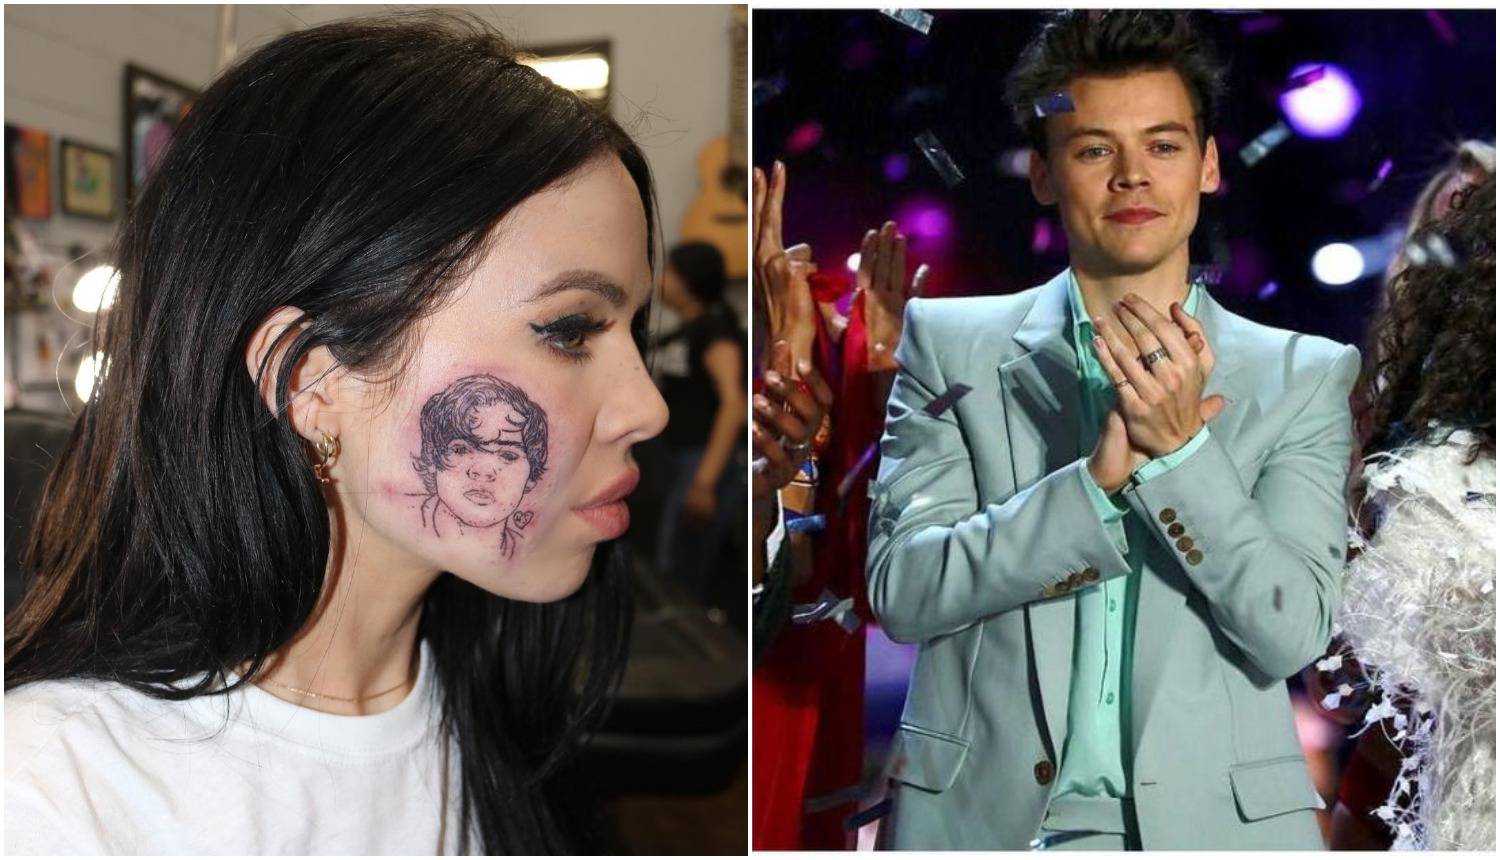 Rođendanski dar: Pjevačica na lice tetovirala Harryja Stylesa